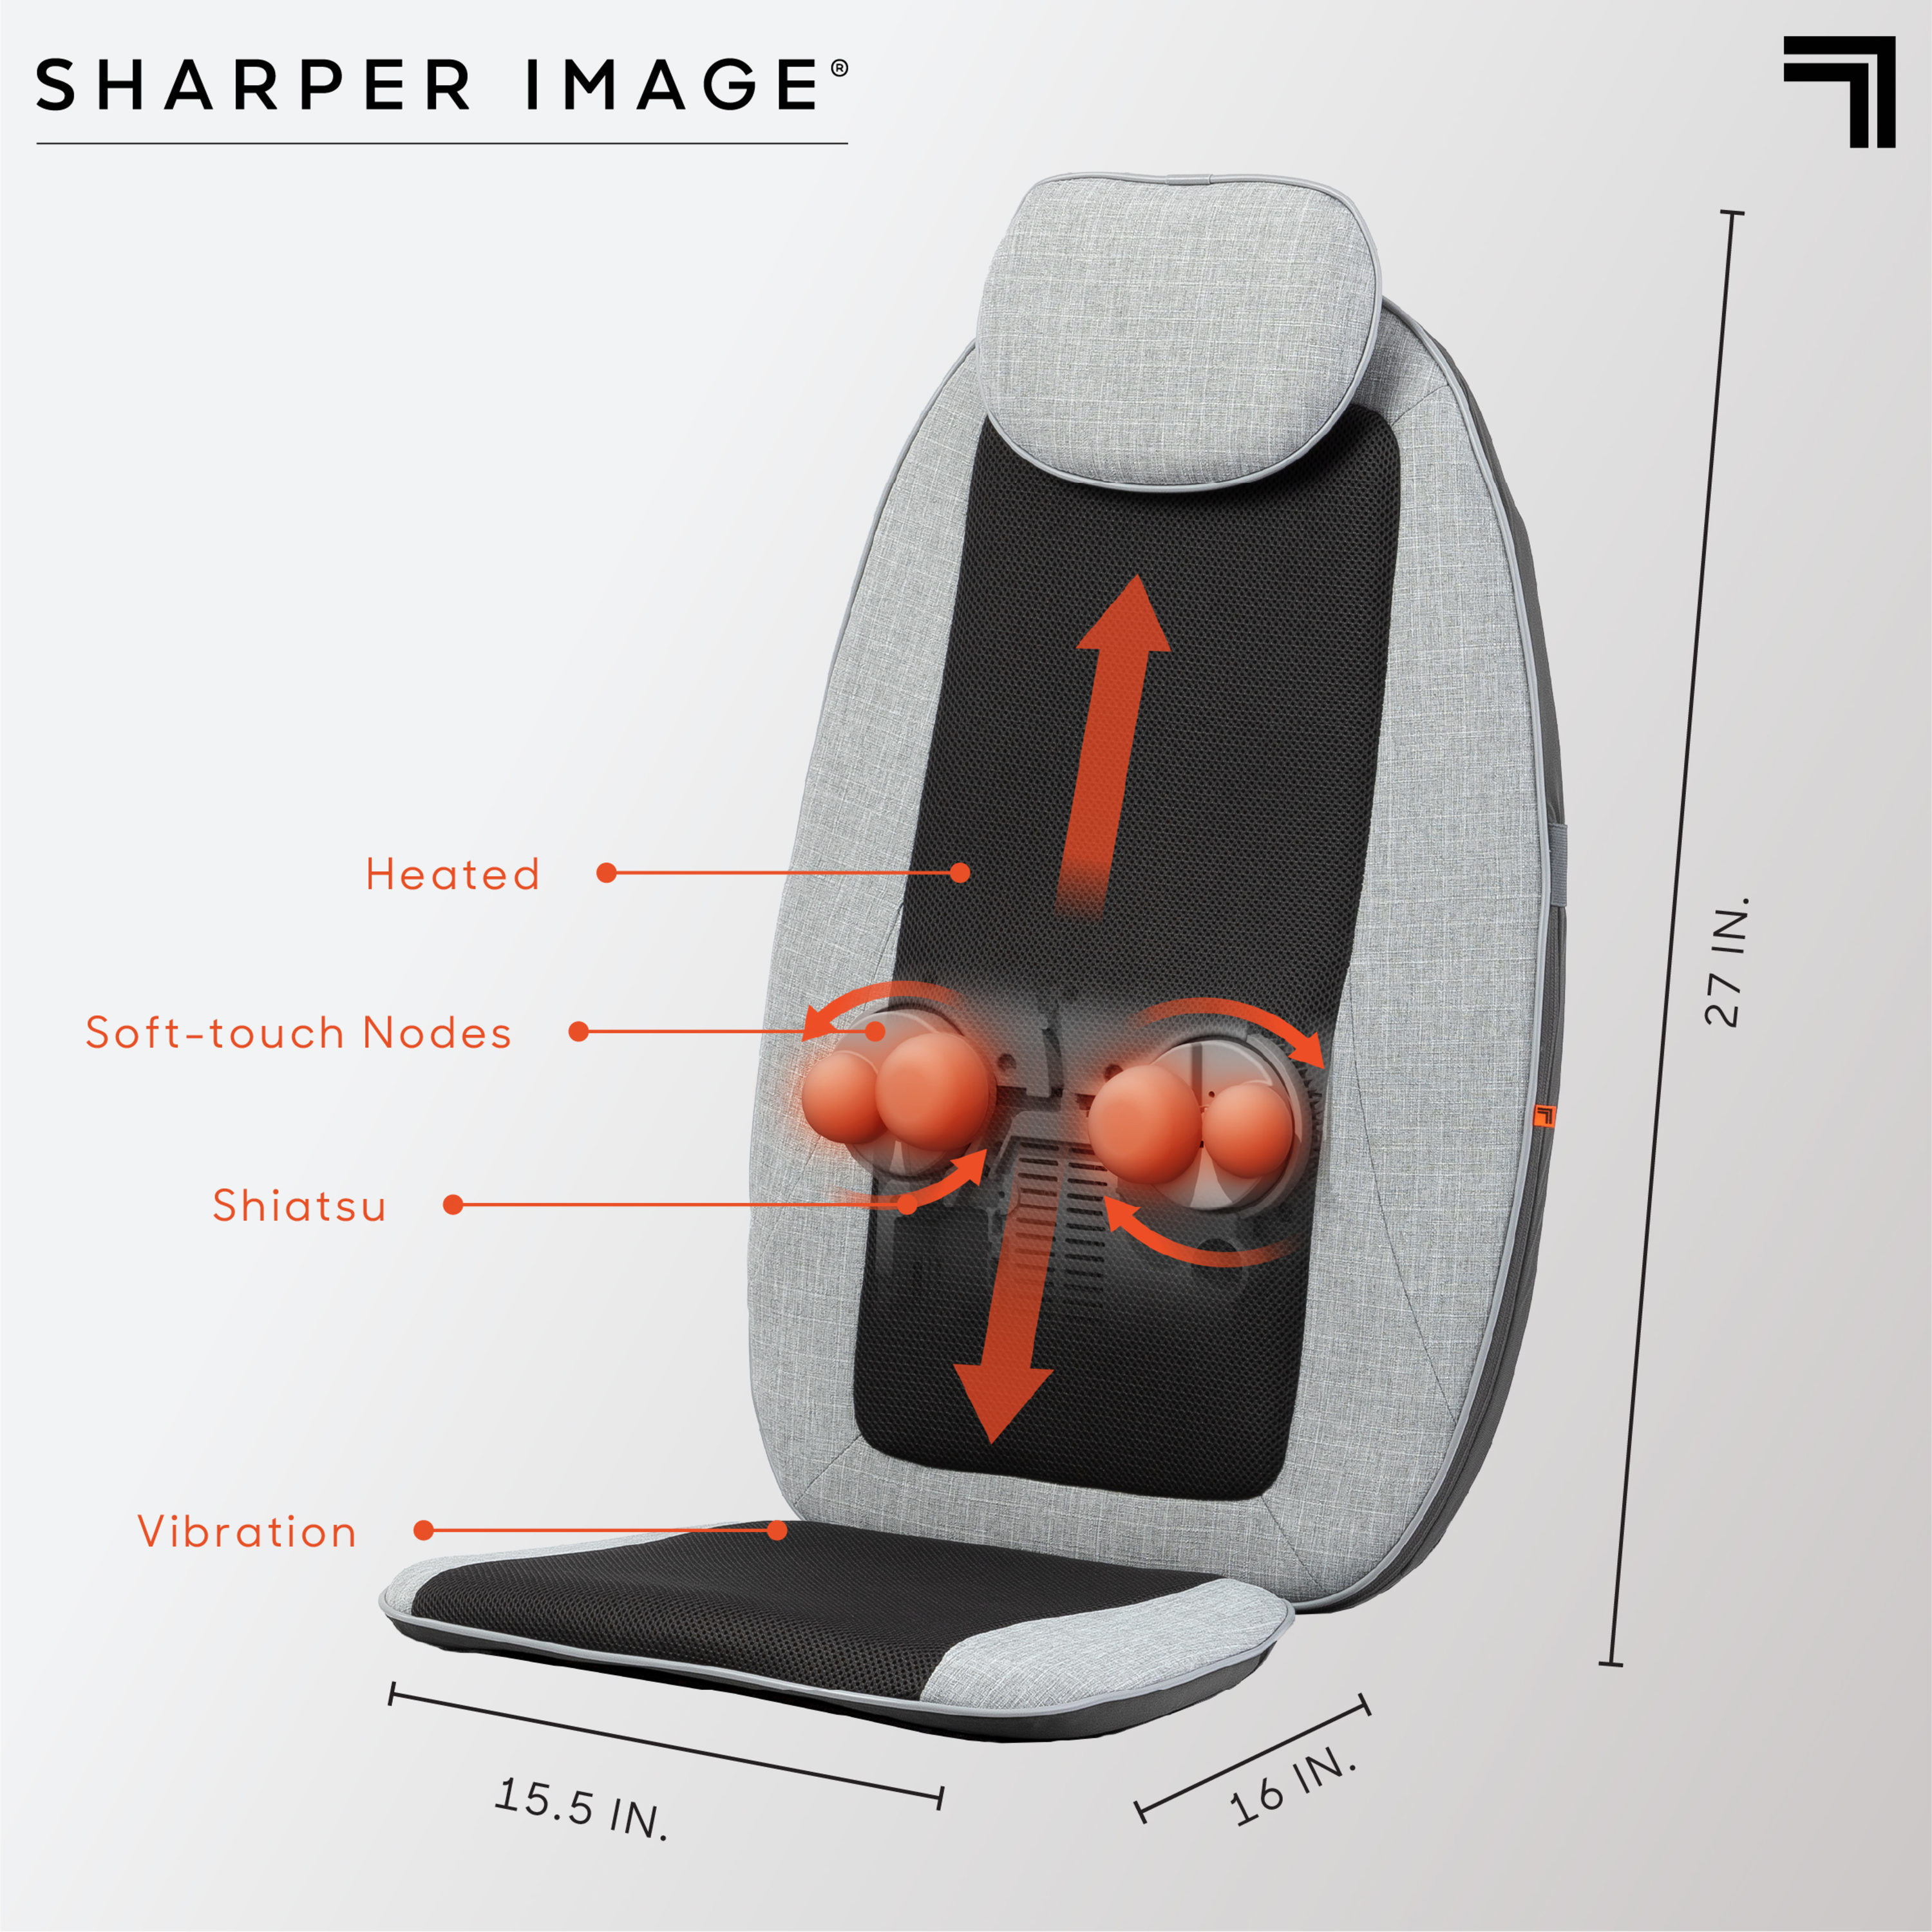 Sharper Image Shiatsu 4-Node Heated Seat Topper Massager - Gray